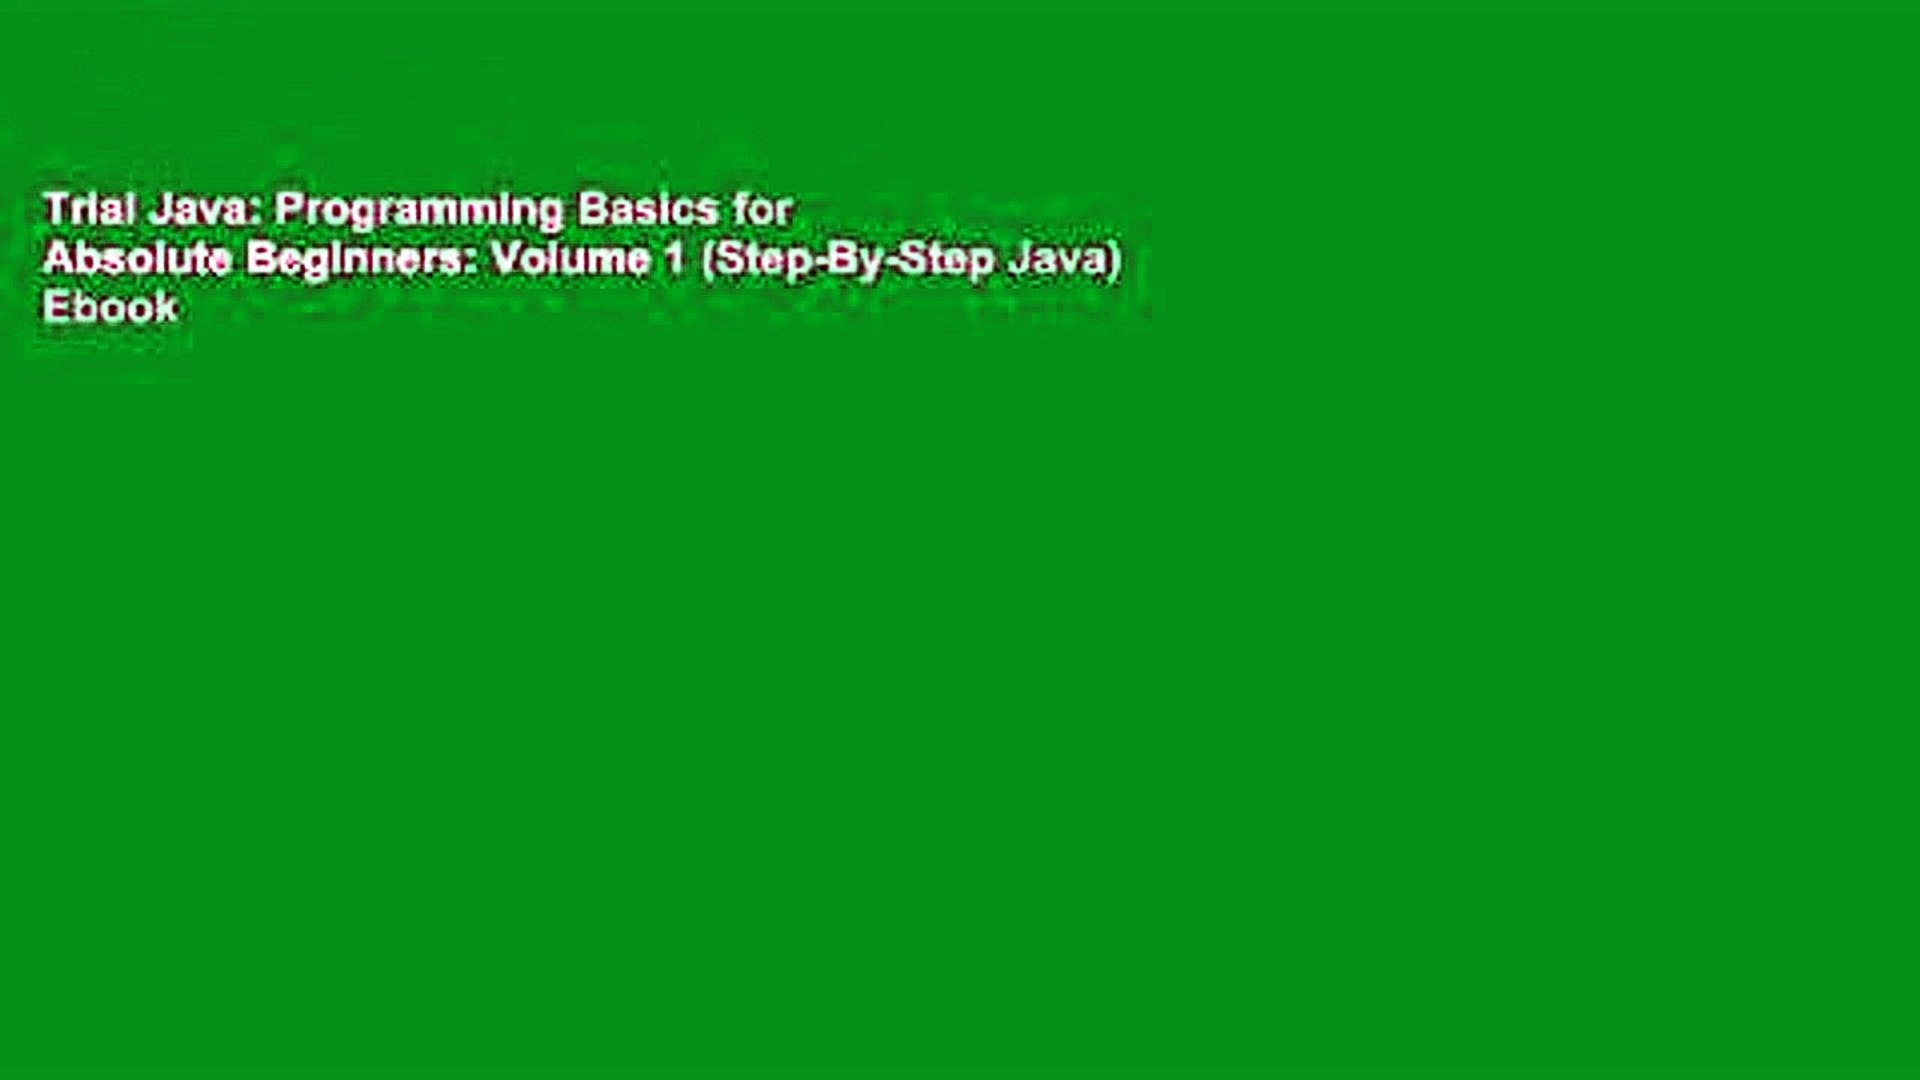 Trial Java: Programming Basics for Absolute Beginners: Volume 1 (Step-By-Step Java) Ebook